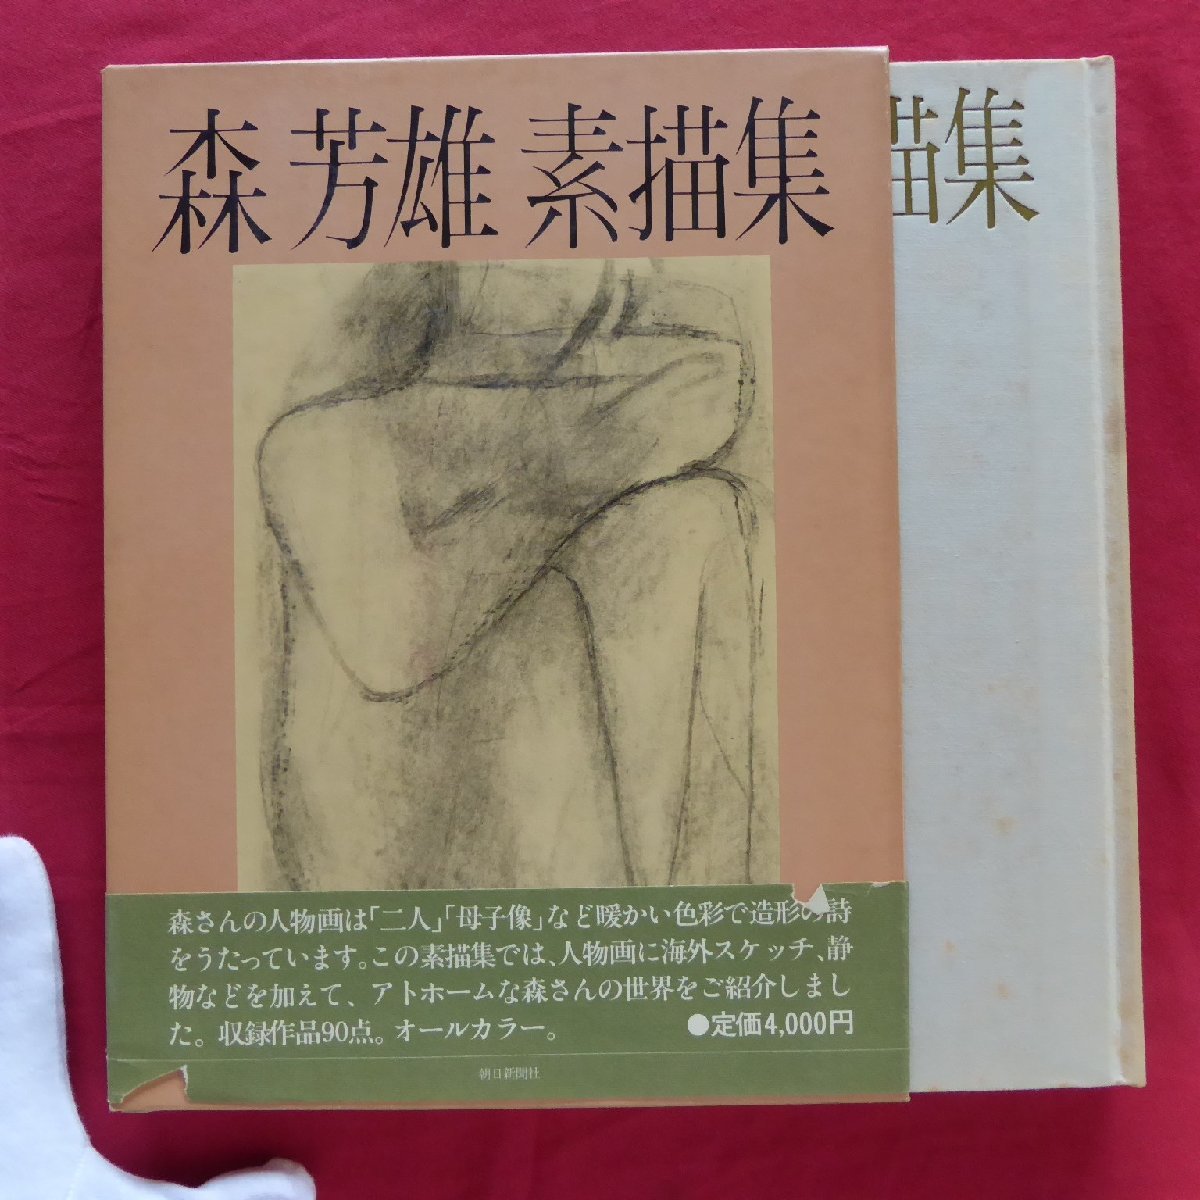 a9 [Mori Yoshio Skizzensammlung/Asahi Shimbun, 1980], Malerei, Kunstbuch, Sammlung, Kunstbuch